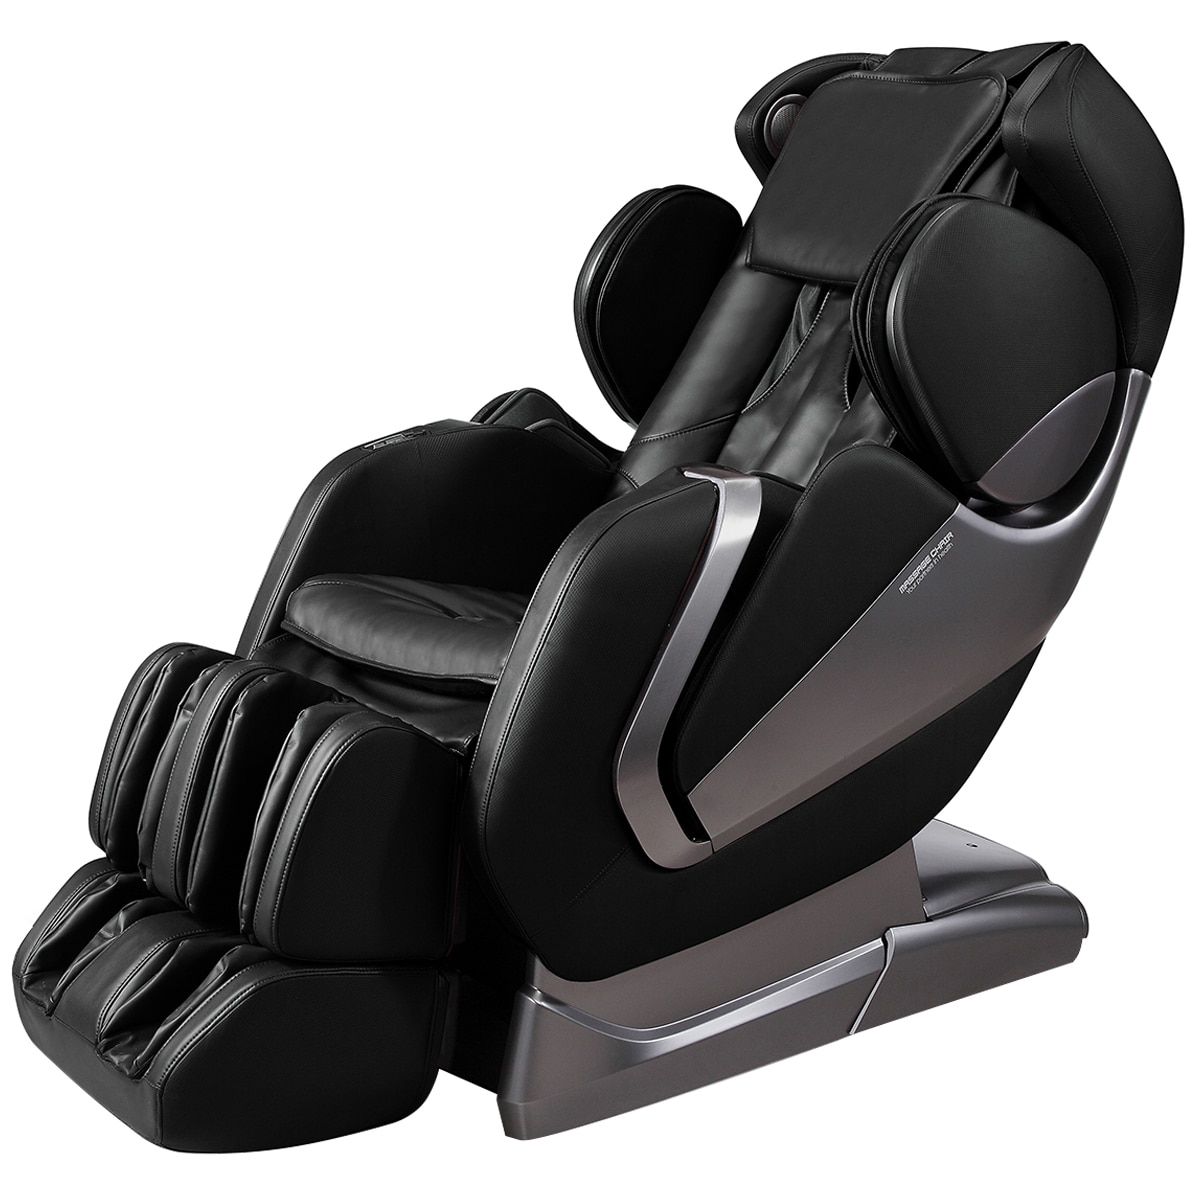 Iyume A385 Full Body Massage Chair Costco Australia